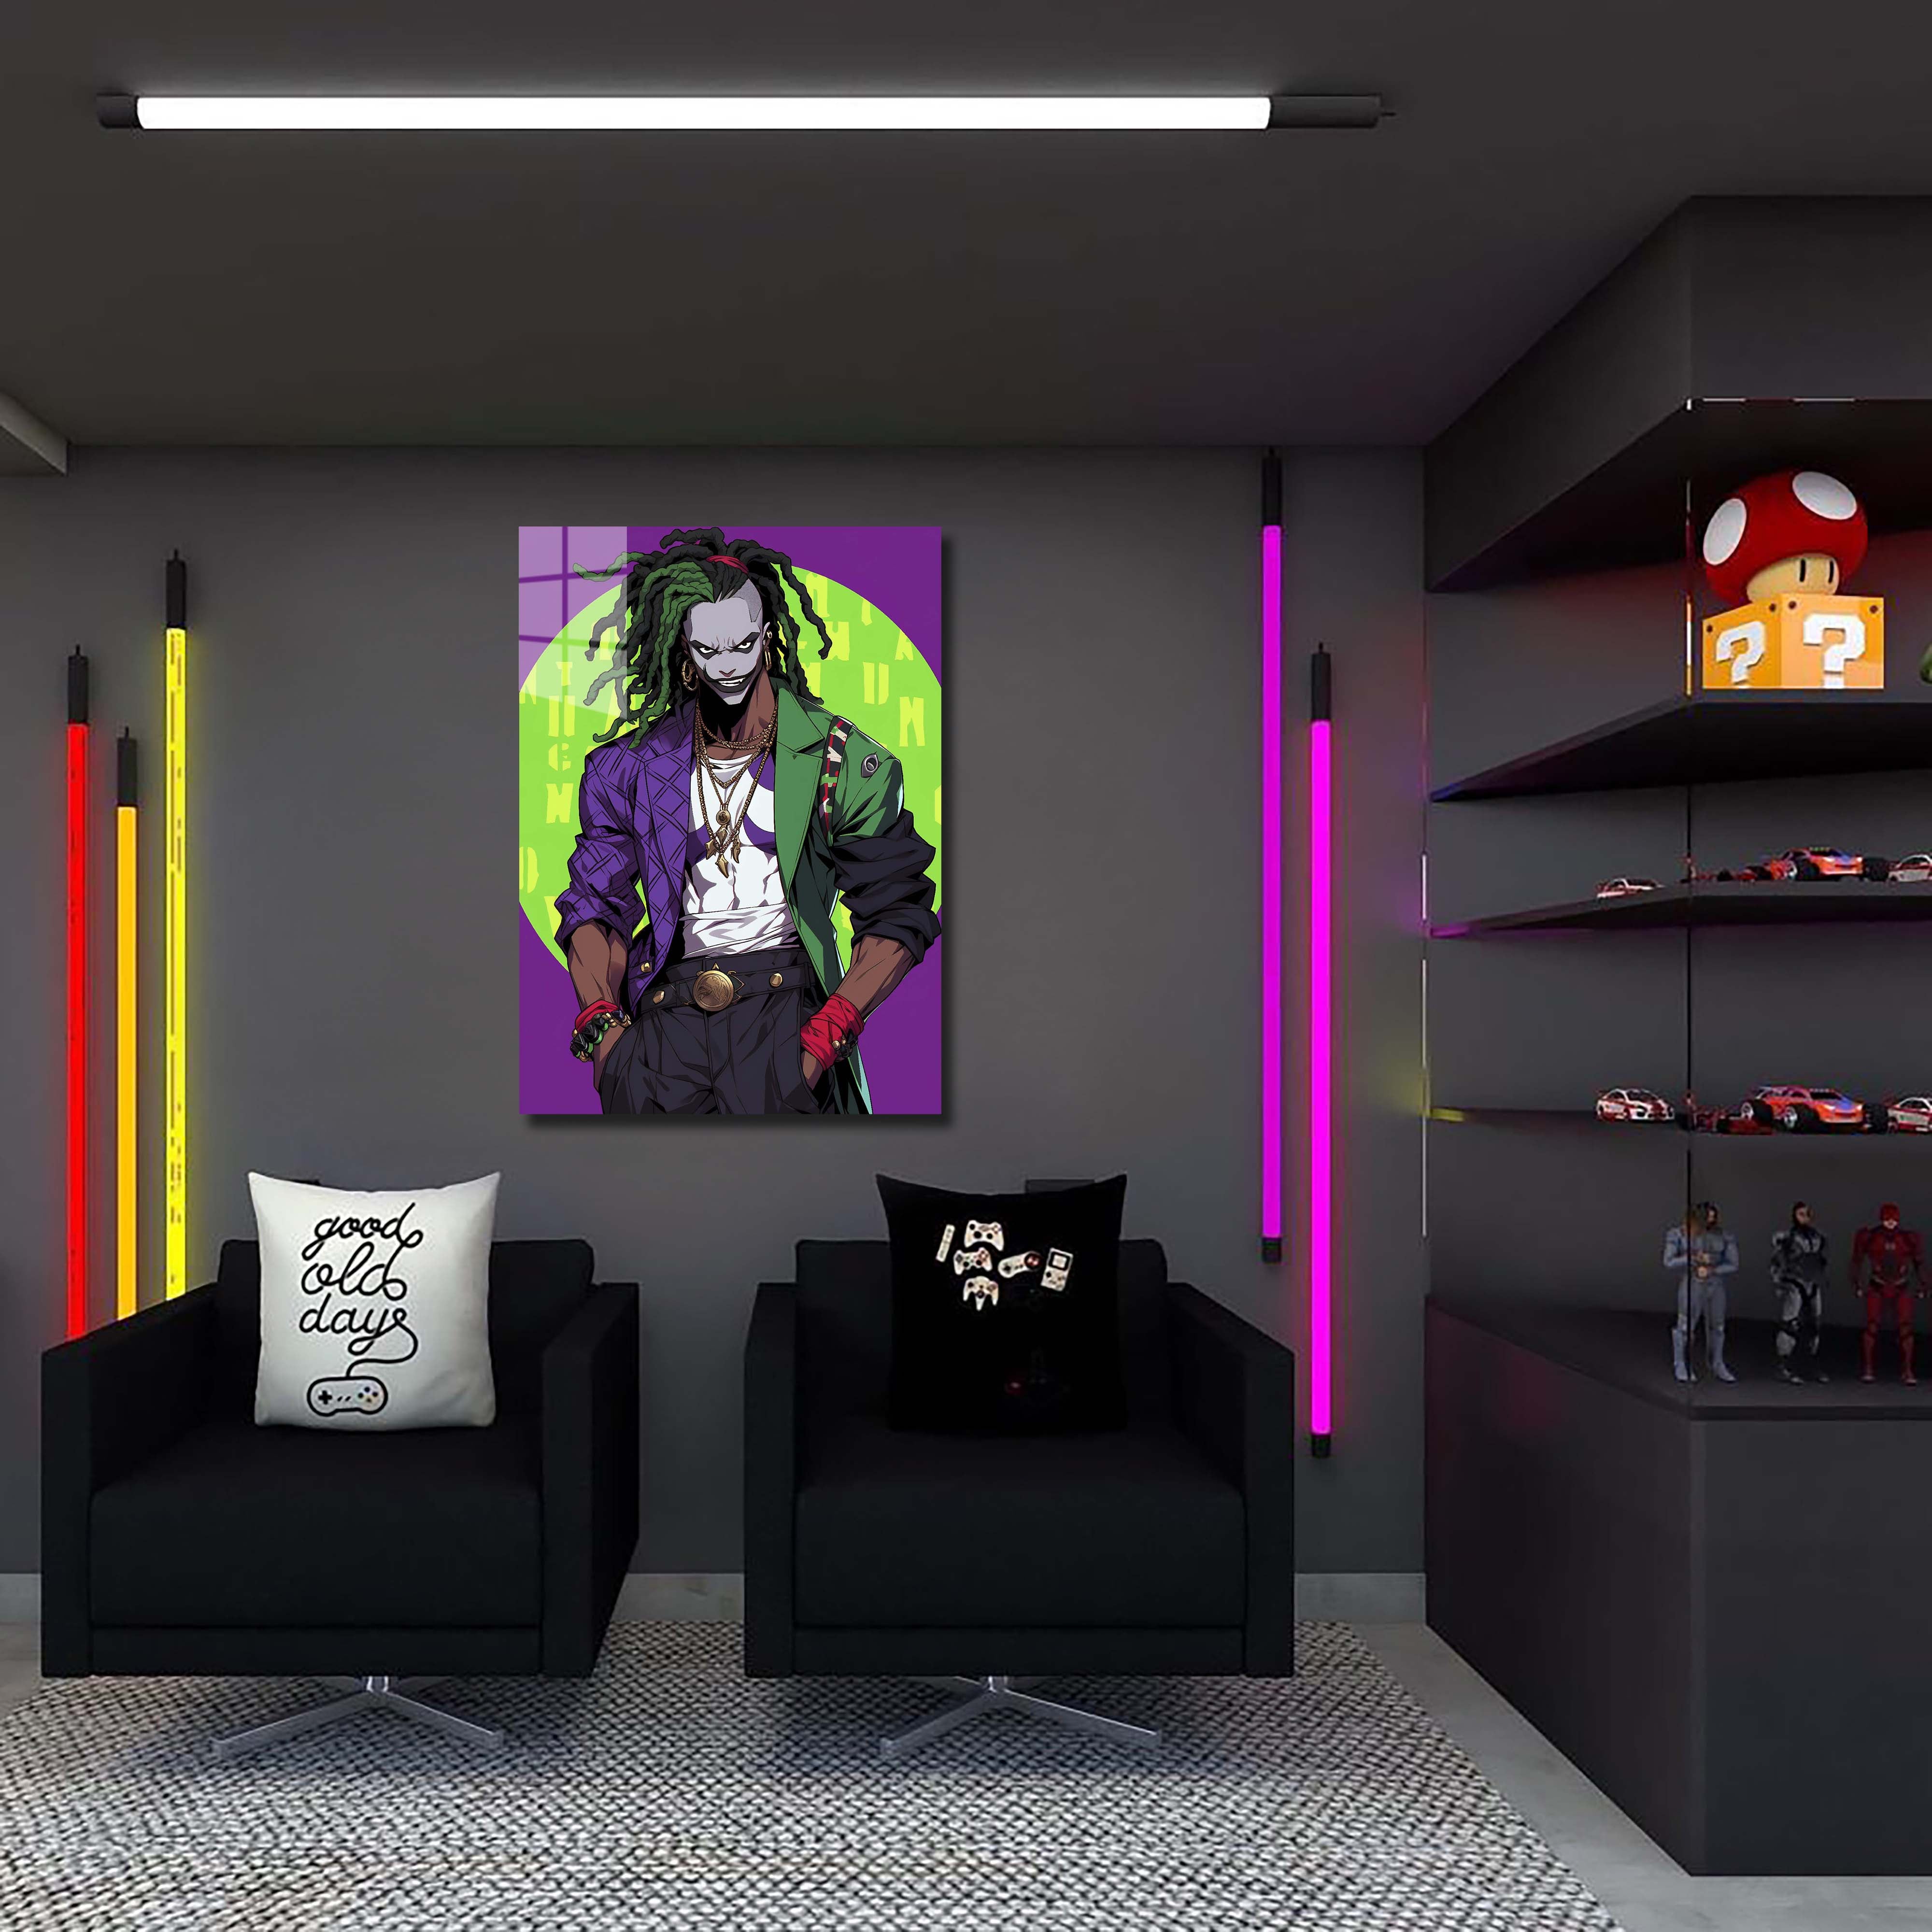 Joker - #0008-designed by @Diegosilva.arts